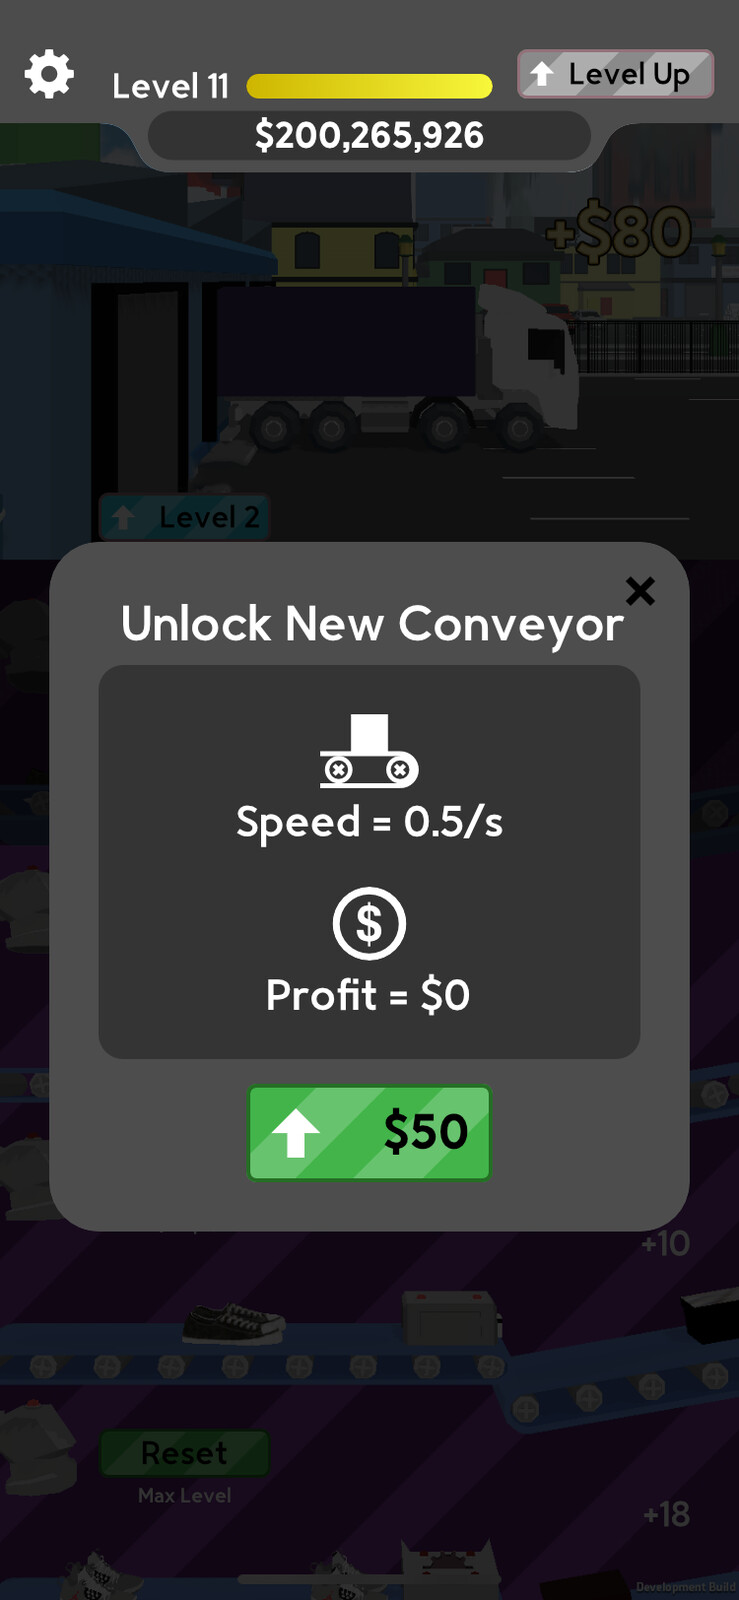 Unlock new conveyor popup window. 

Custom UI and icons made with Affinity Designer.